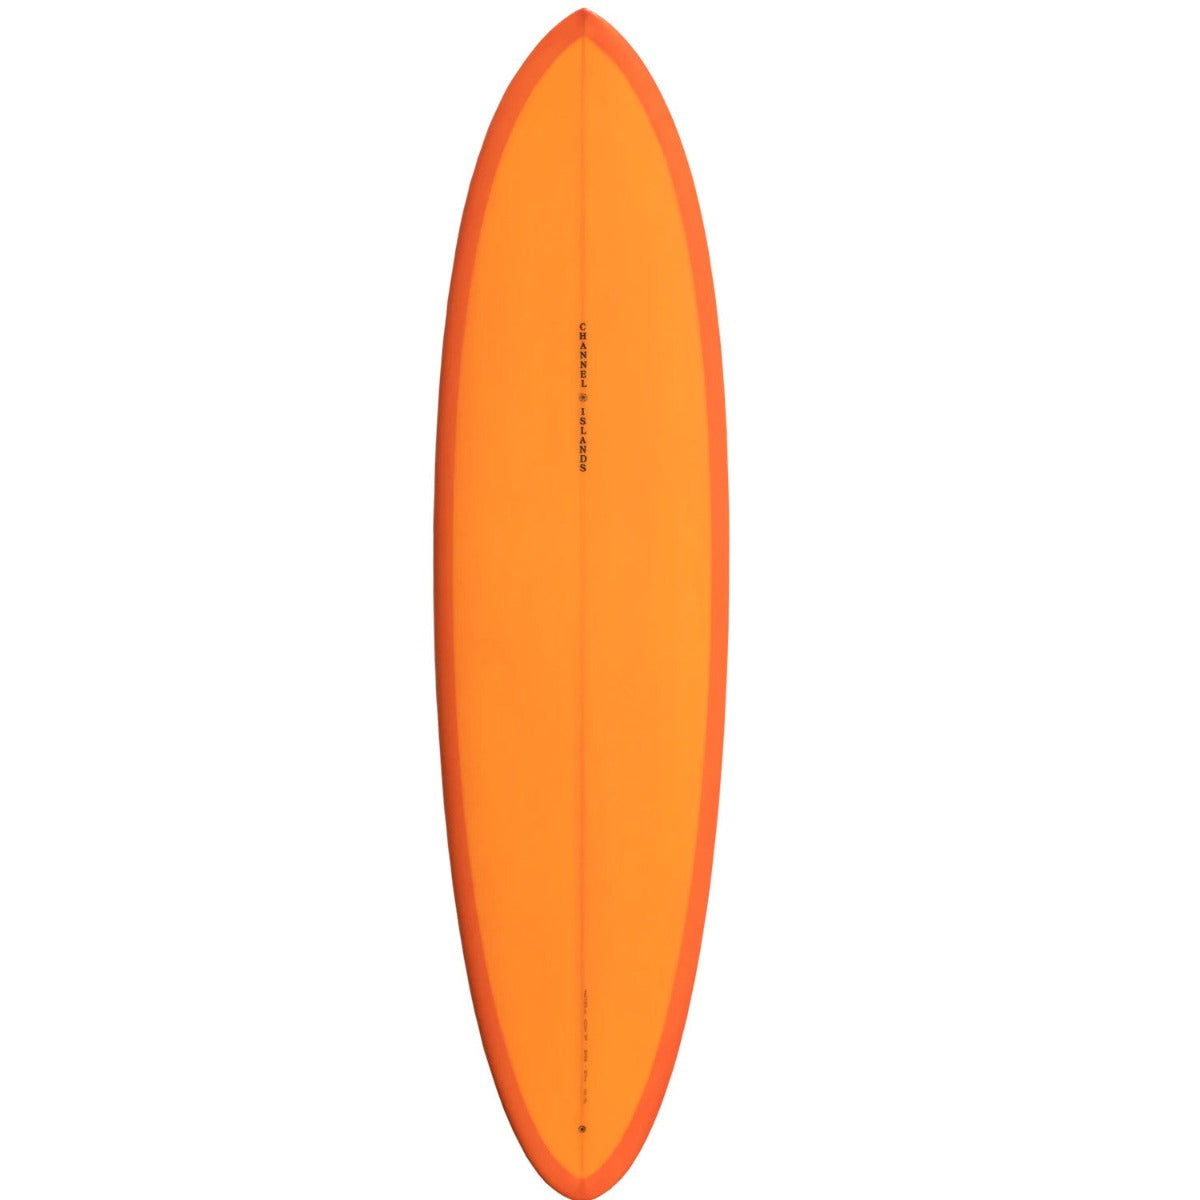 channel-islands-midlength-ci-mid-orange-deck-surfboard-galway-ireland-blacksheepsurfco